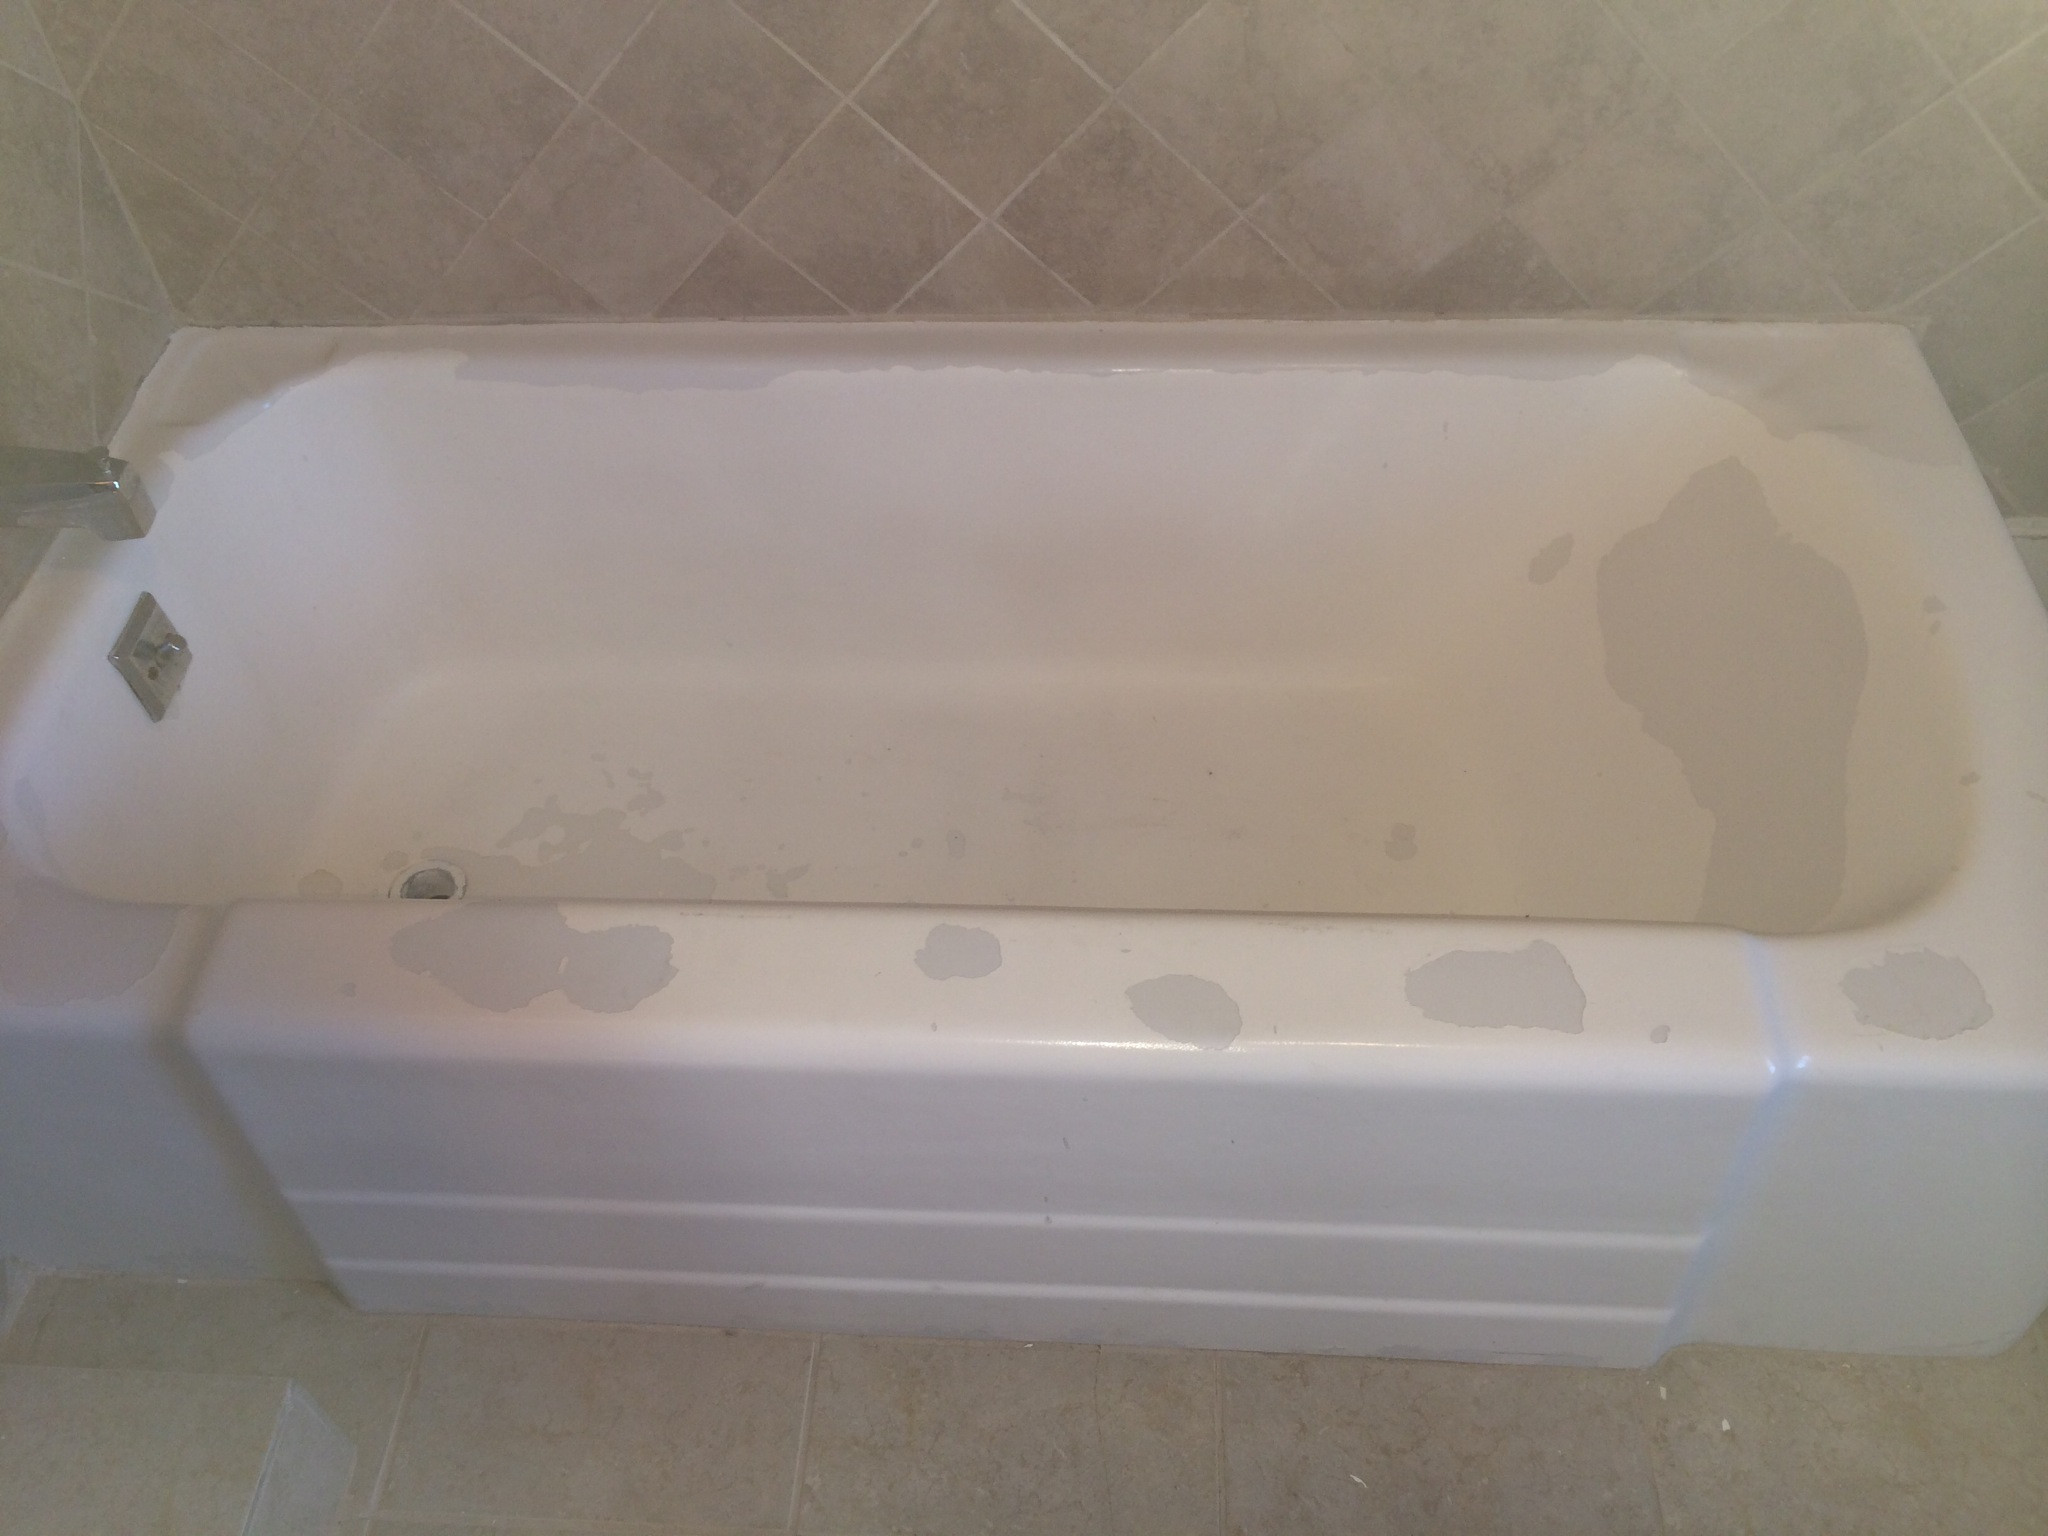 Best ideas about DIY Bathtub Refinish
. Save or Pin Blog Archives Total Bathtub Refinishing Tub Reglazing Now.